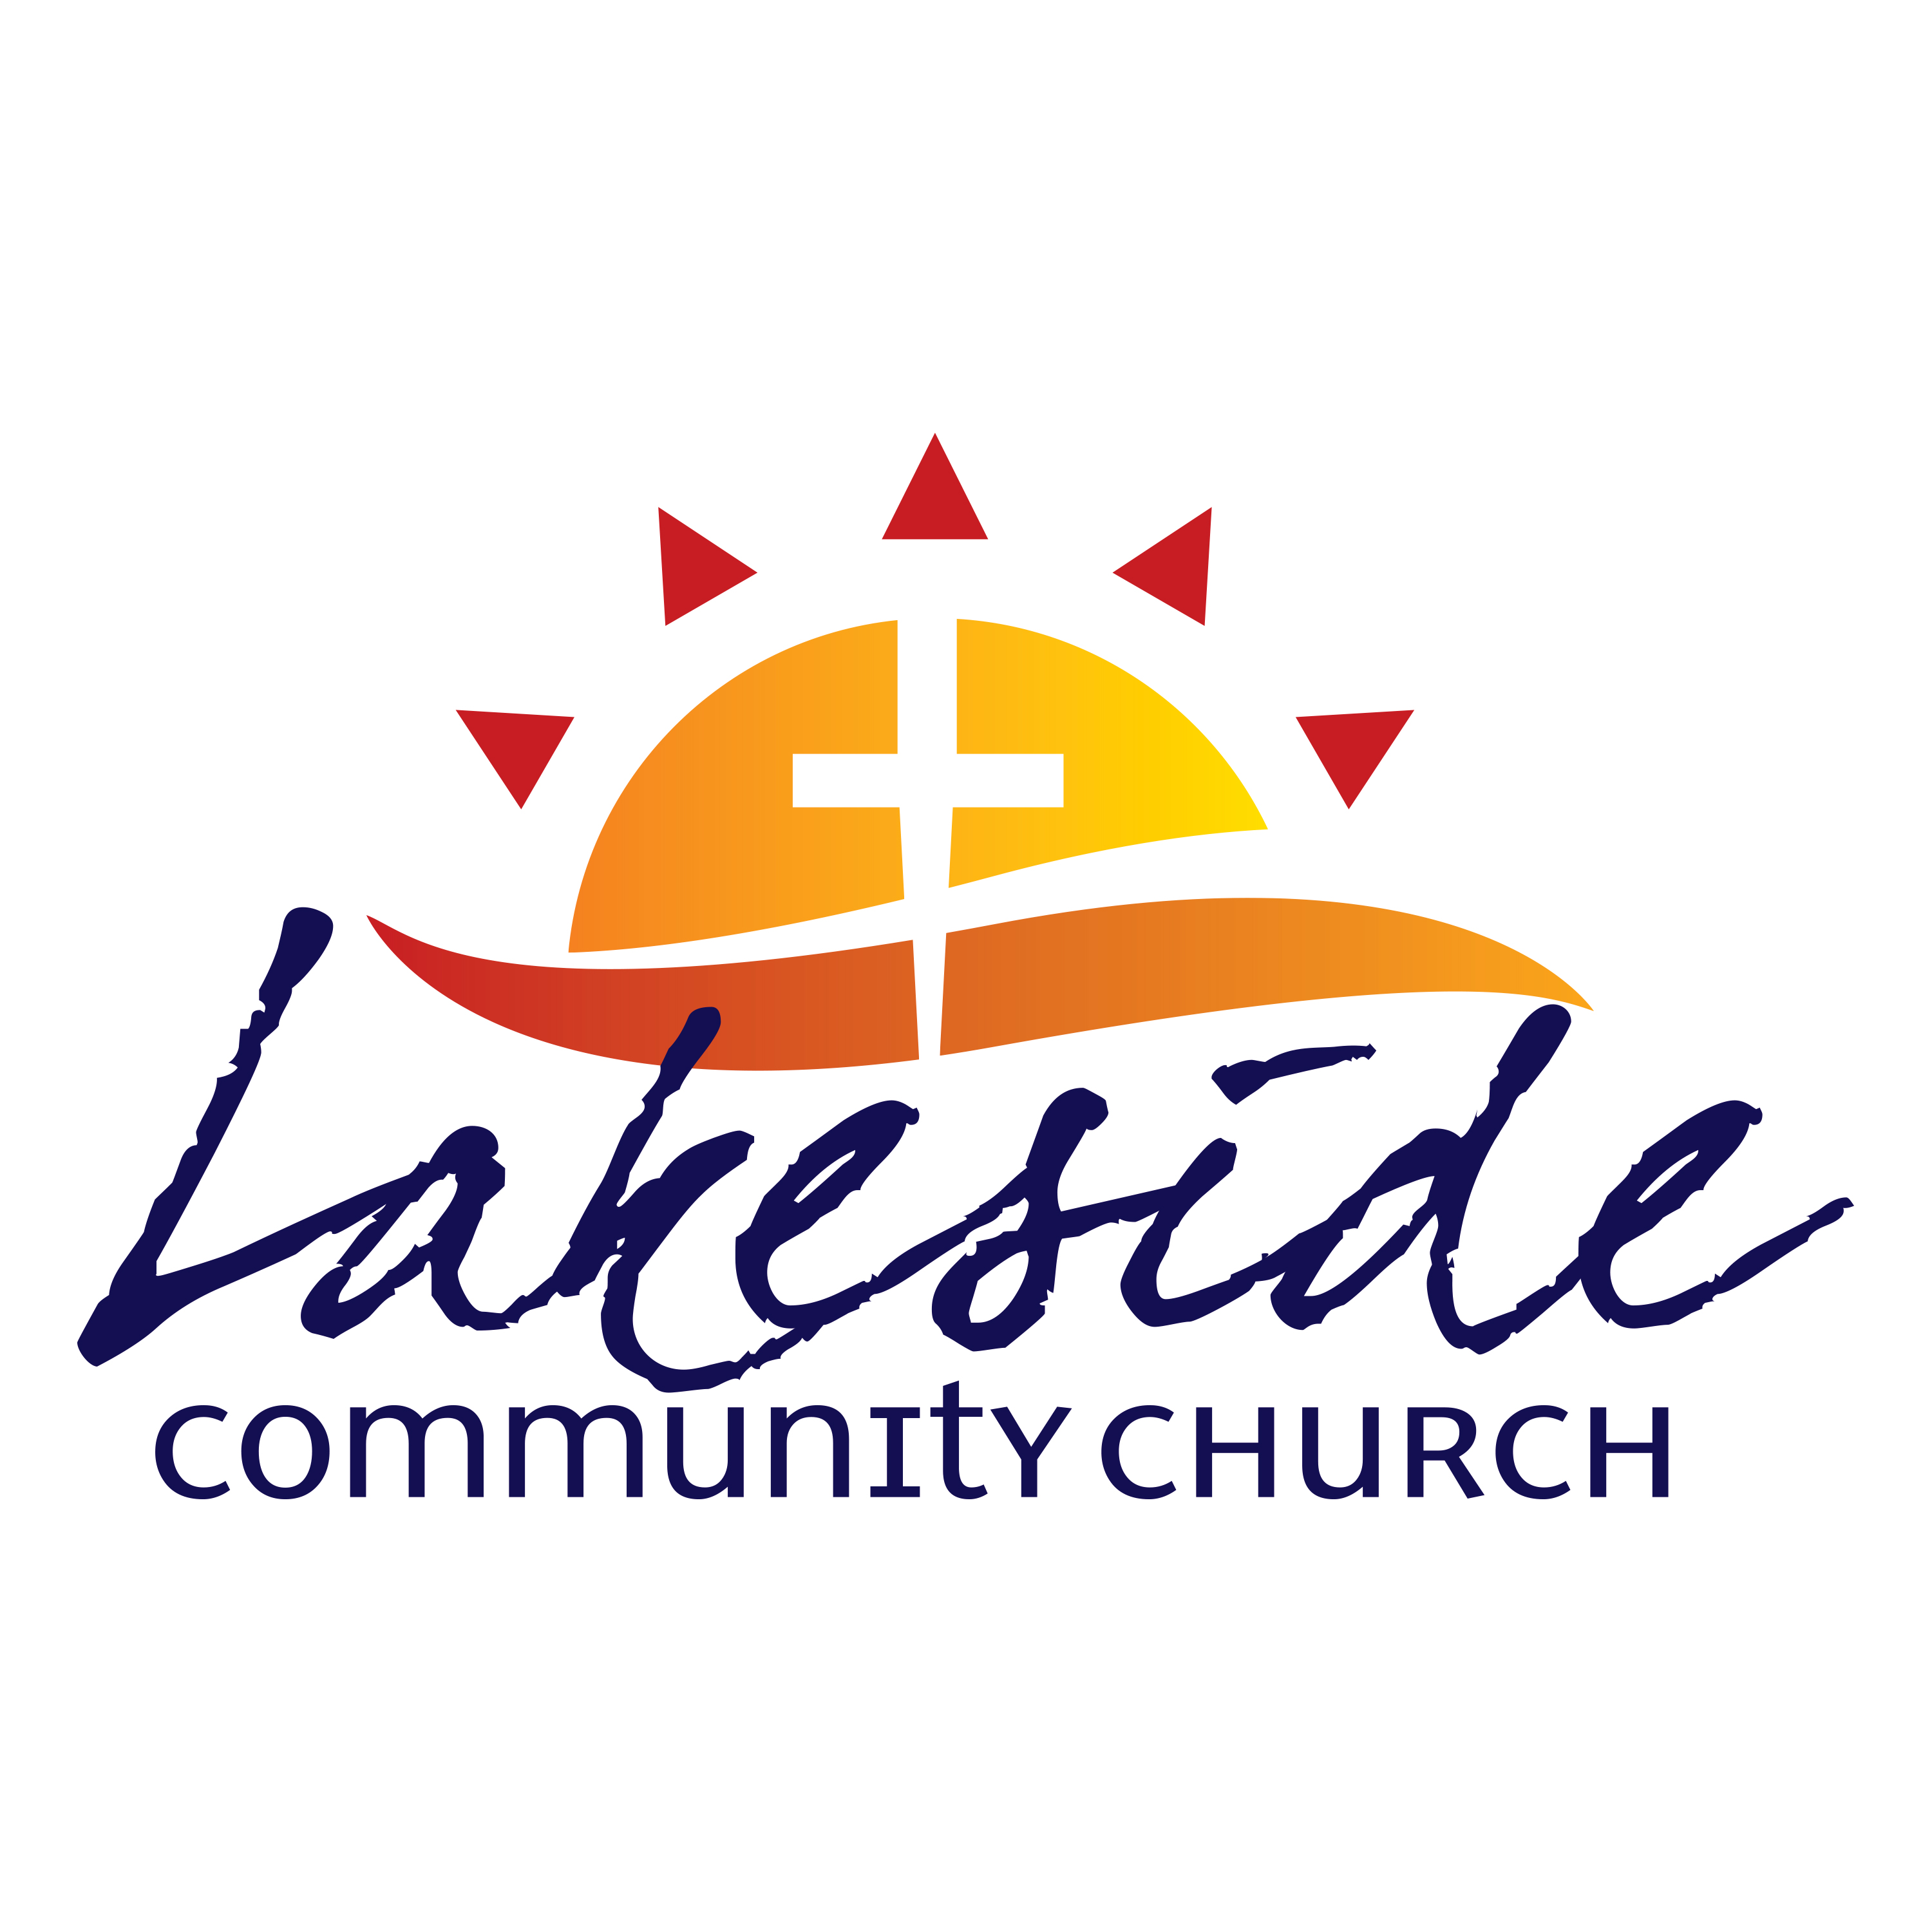 Lakeside Community Church in Salmon Arm, BC